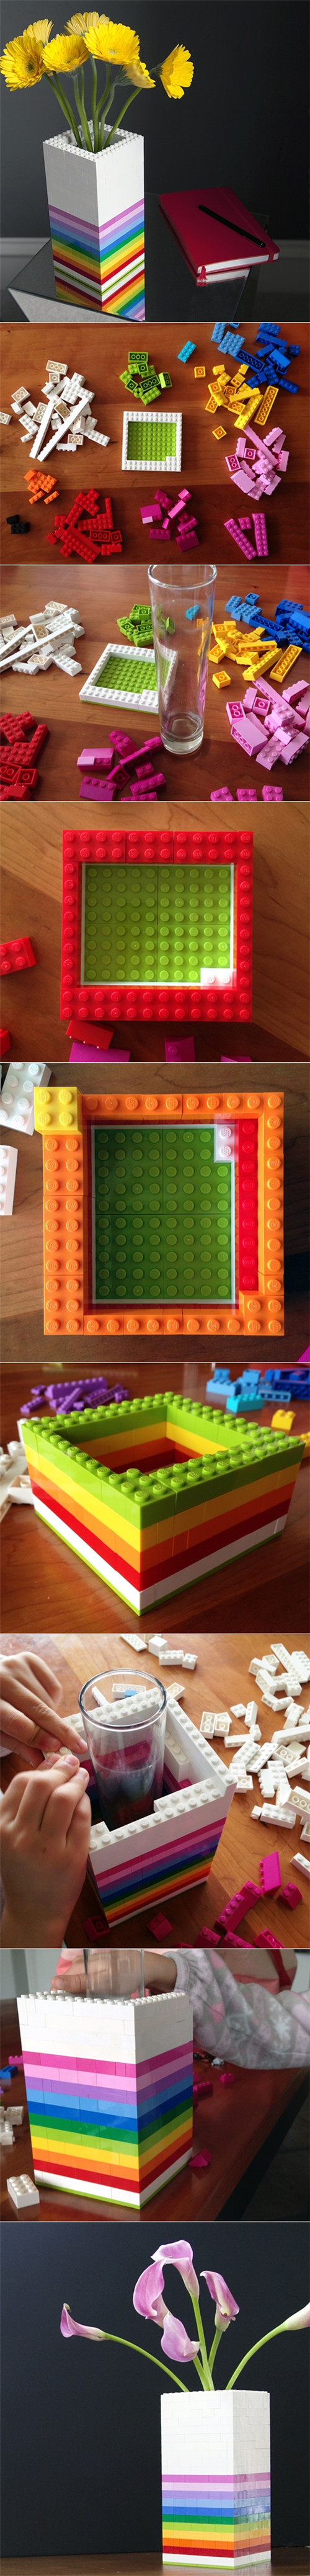 Lego art 5